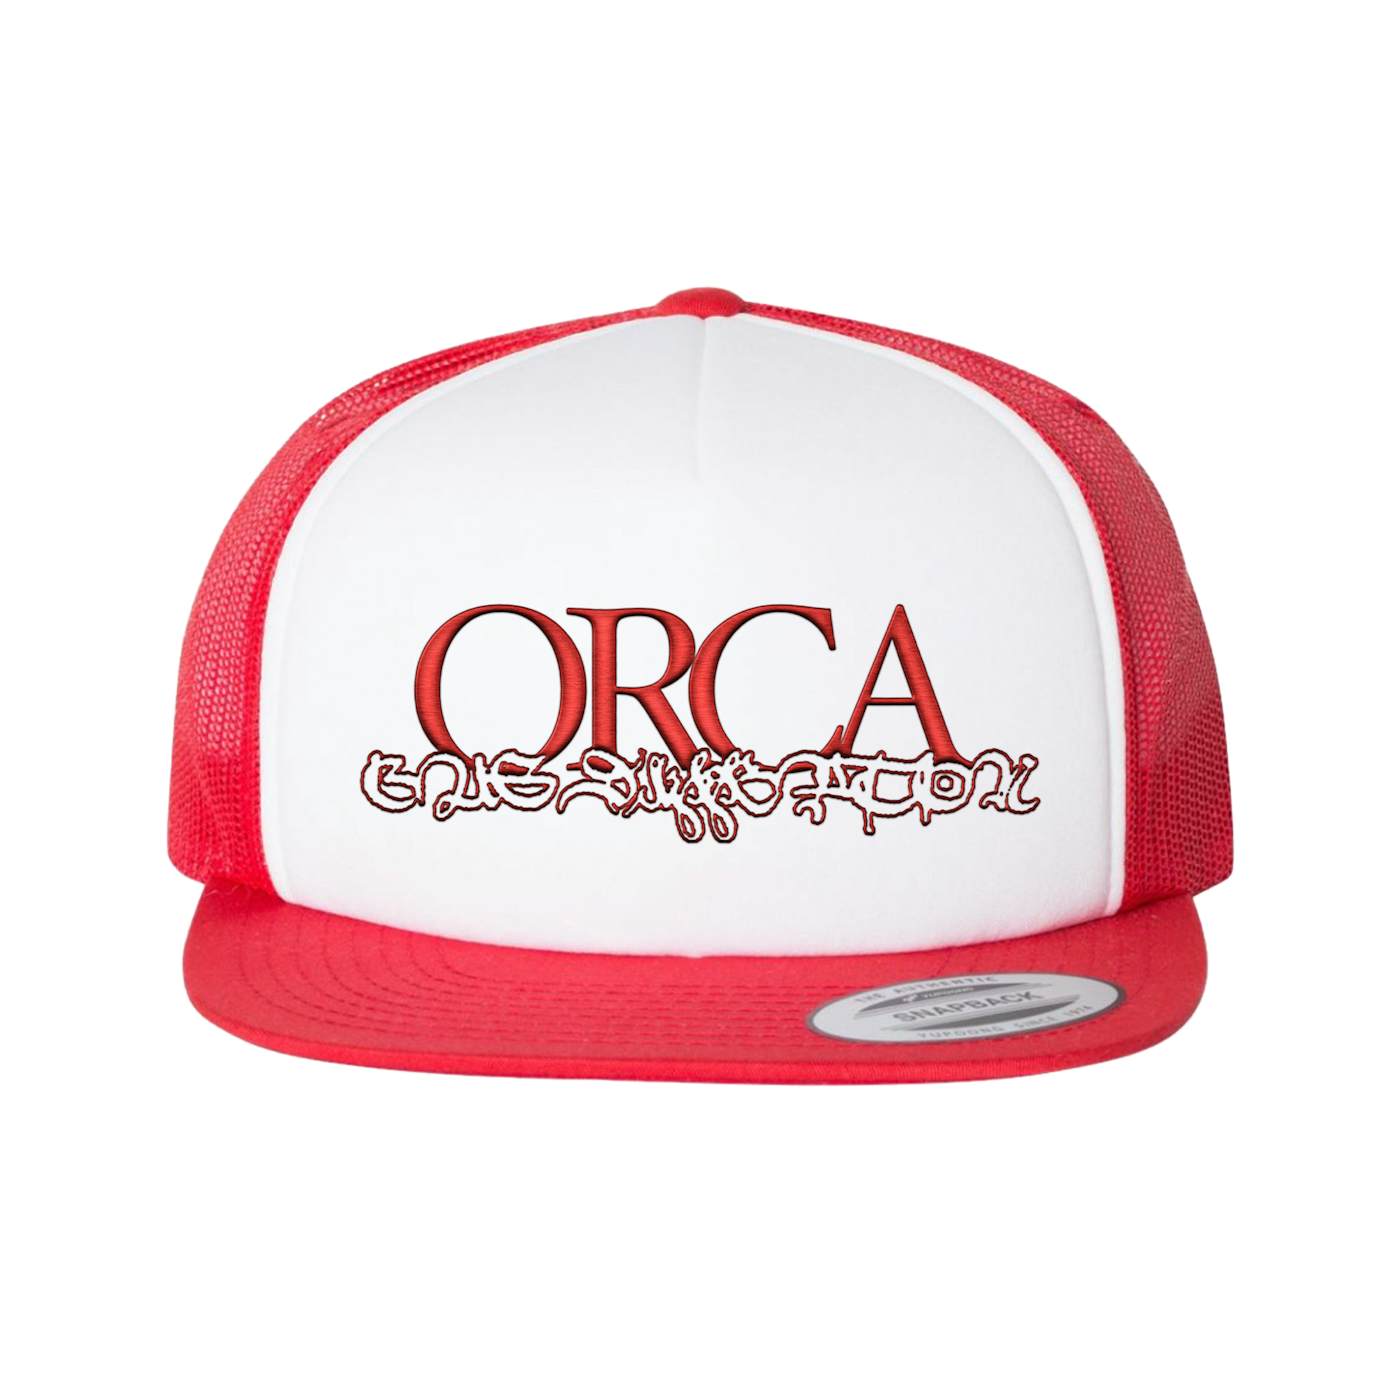 Gus Dapperton Orca Tour Trucker Hat